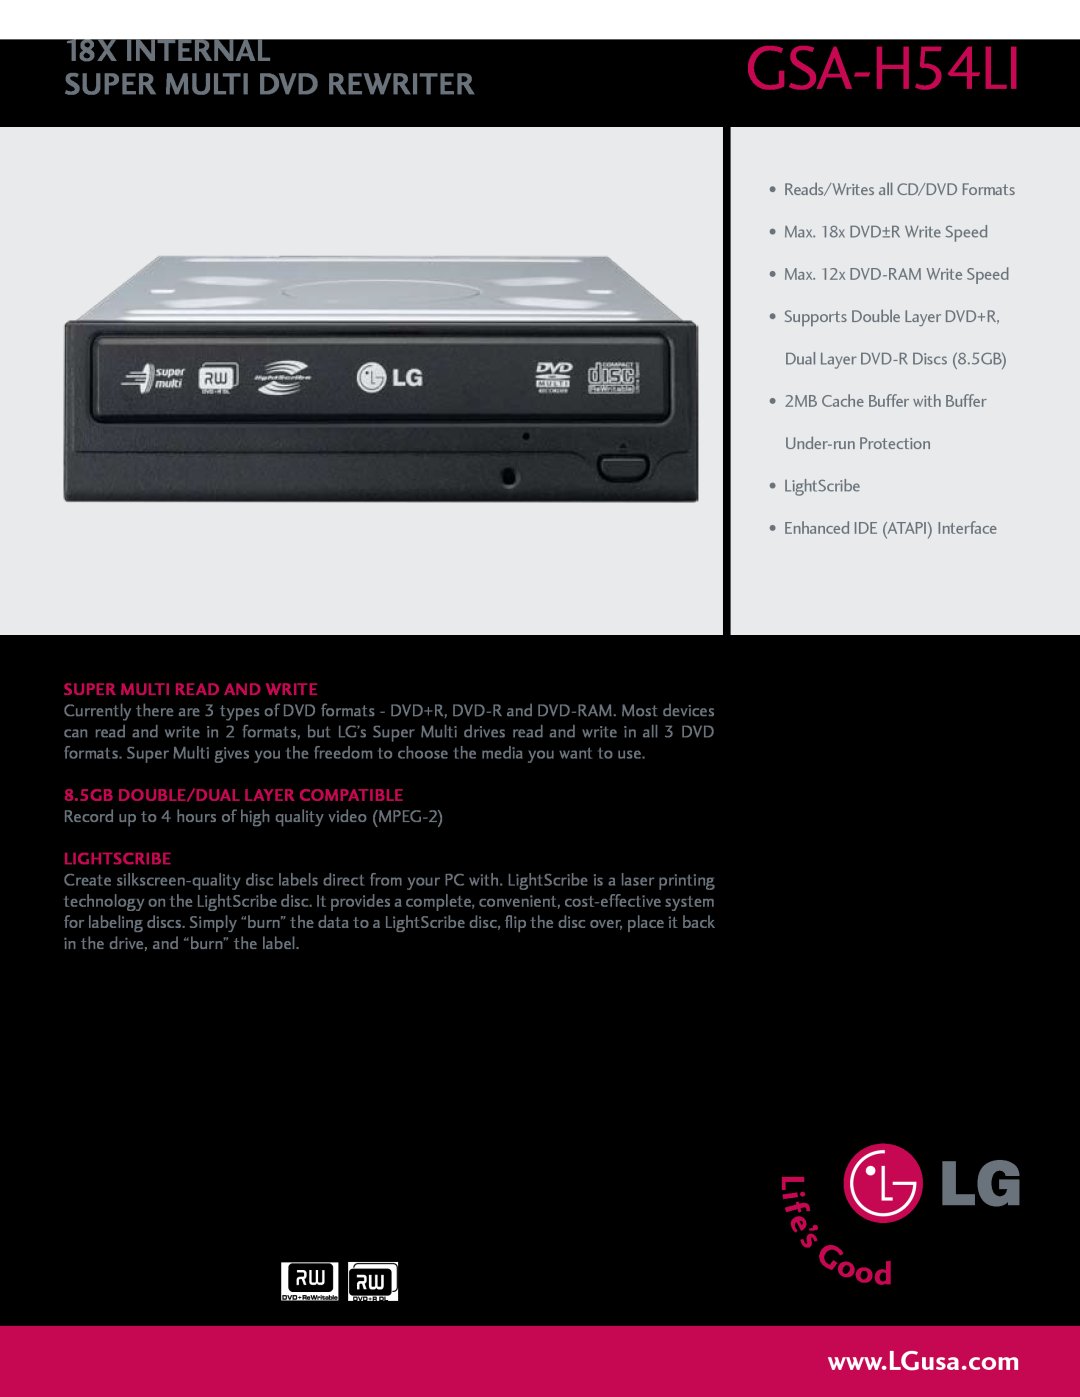 LG Electronics GSA-H54LI manual 18X INTERNAL SUPER MULTI DVD REWRITER, super multi read and write, lightscribe 